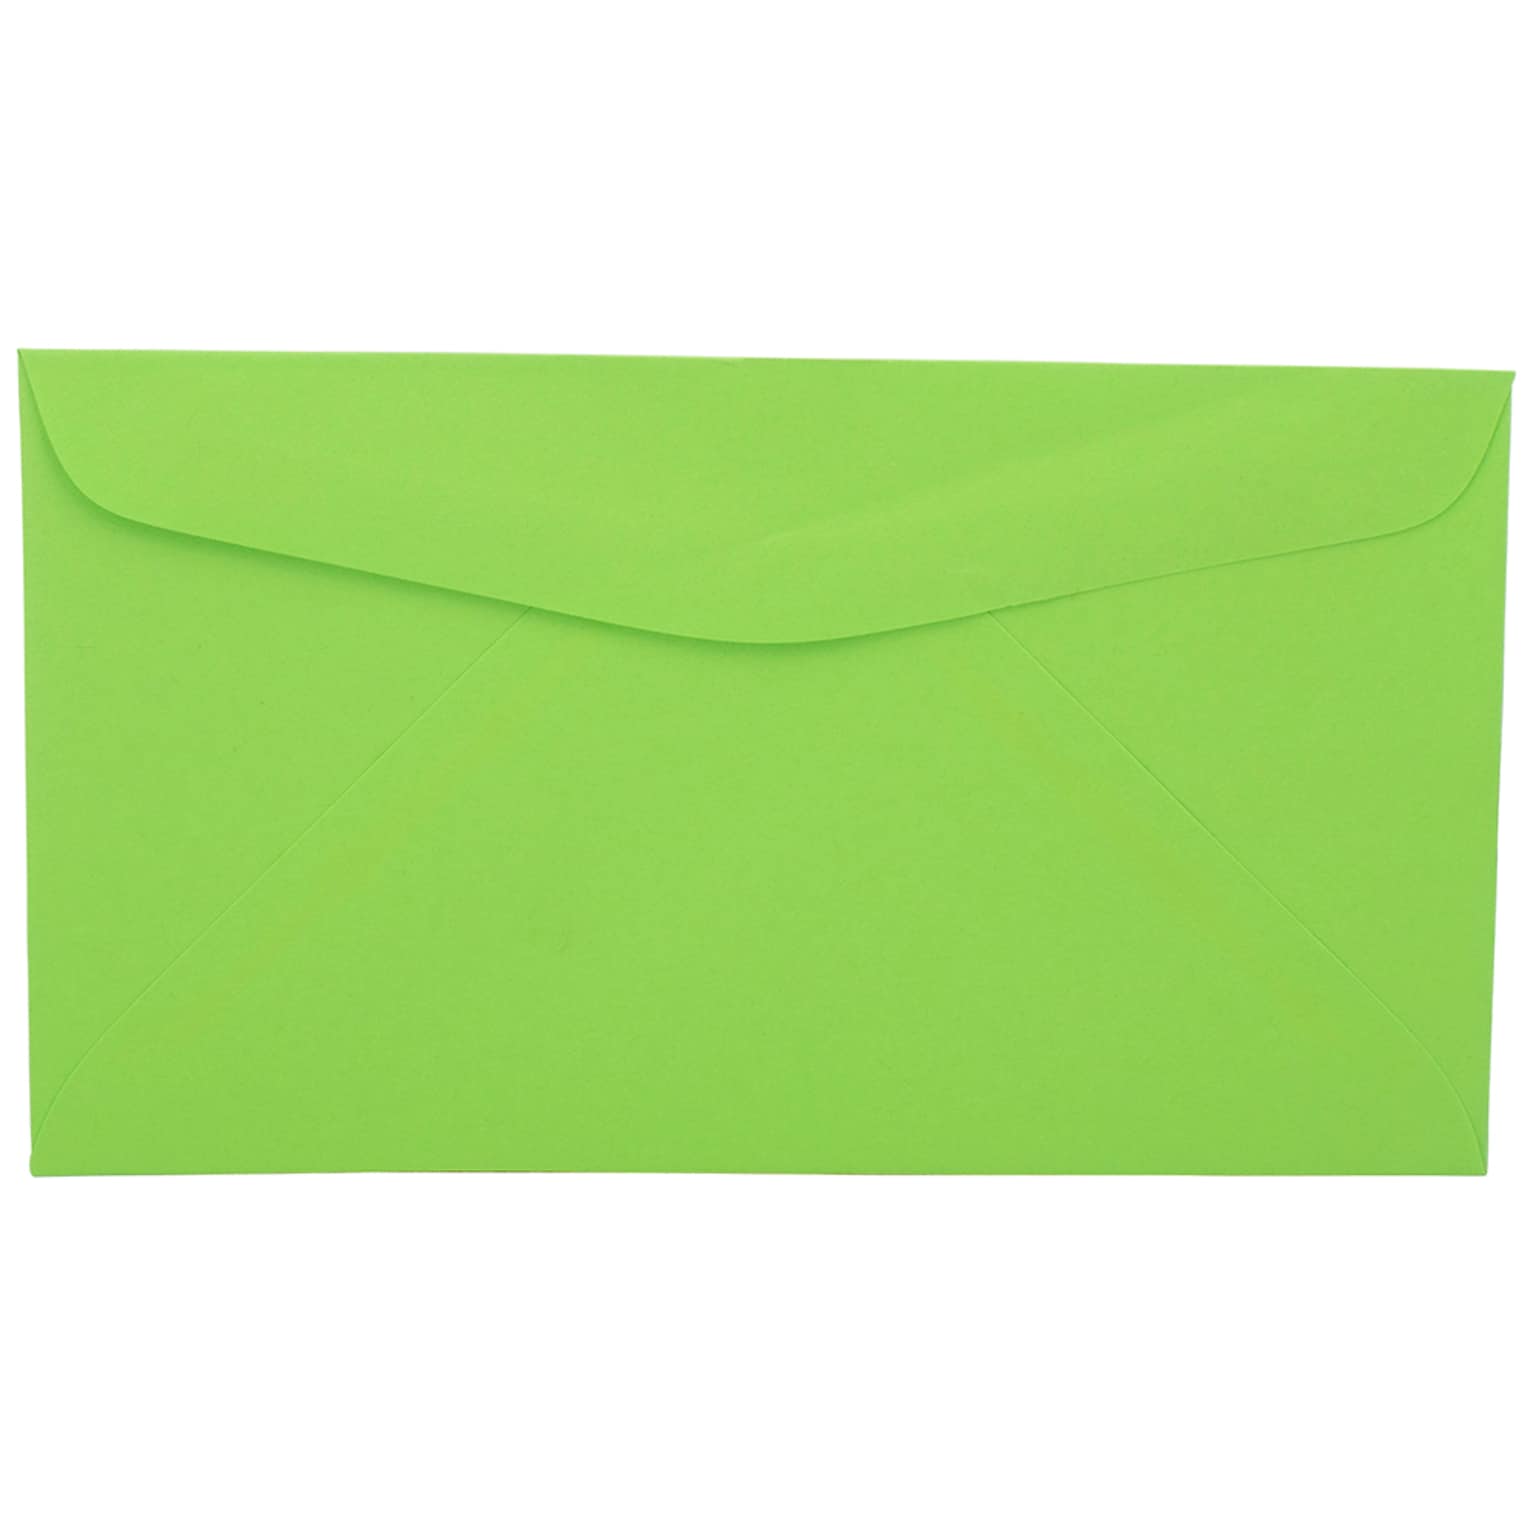 JAM Paper #6 3/4 Business Envelope, 3 5/8 x 6 1/2, Light Green, 500/Box (457611417B)